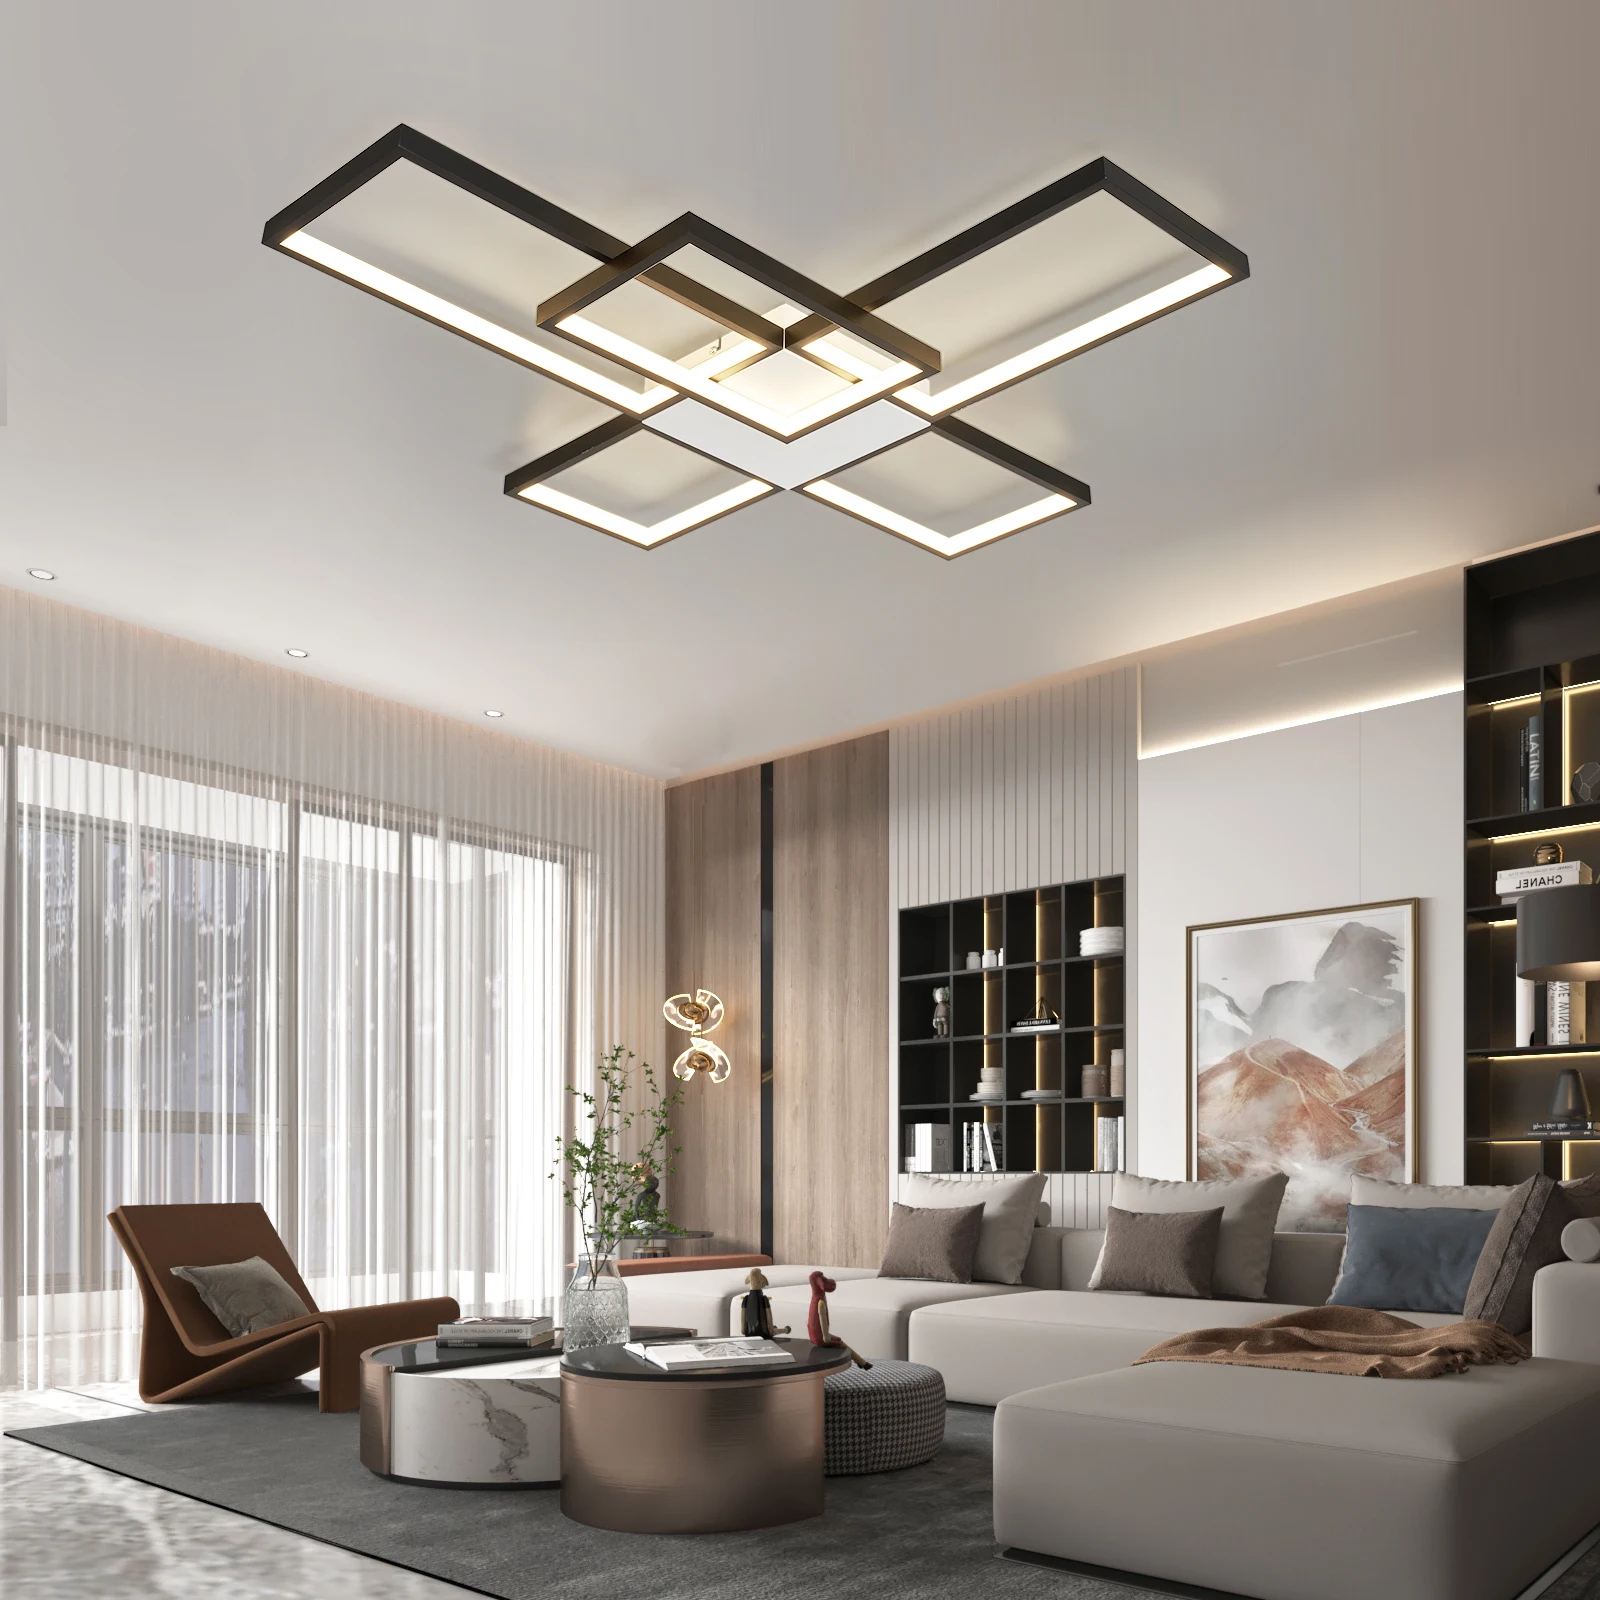 New Modern Led Ceiling Lights for livingroom bedroom lustre home decor Dimmable Ceiling light Black/Gold Ceiling Lamp Fixtures